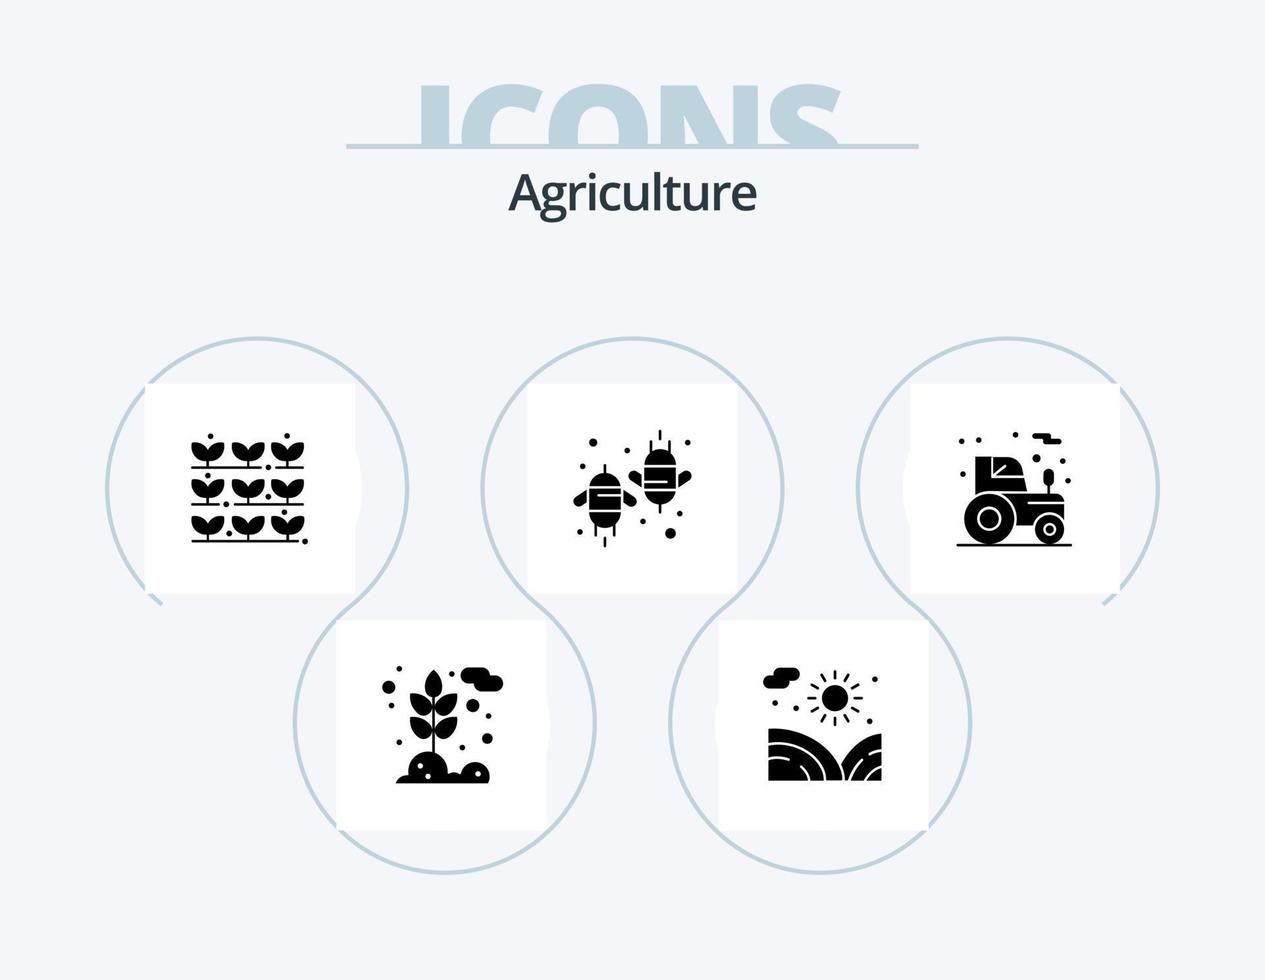 paquete de iconos de glifos de agricultura 5 diseño de iconos. agricultura. ecología. agricultura. ecológico agricultura vector